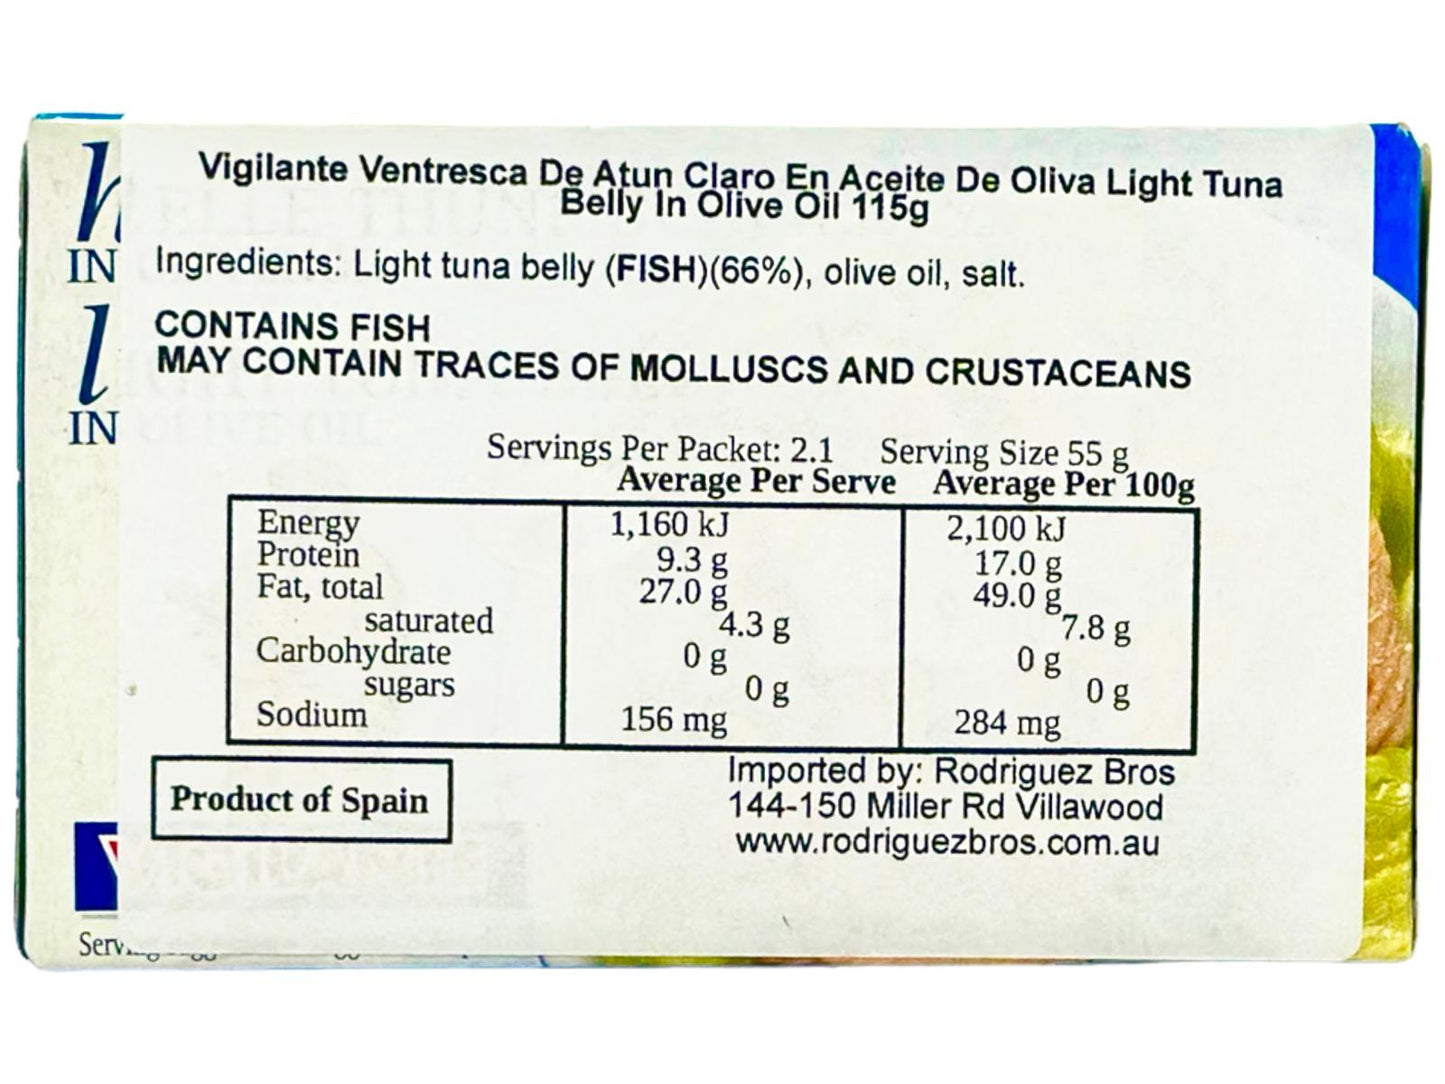 Vigilante Ventresca de Atun Claro en Aceite de Oliva Spain - Light Tuna Belly in Olive Oil 115g